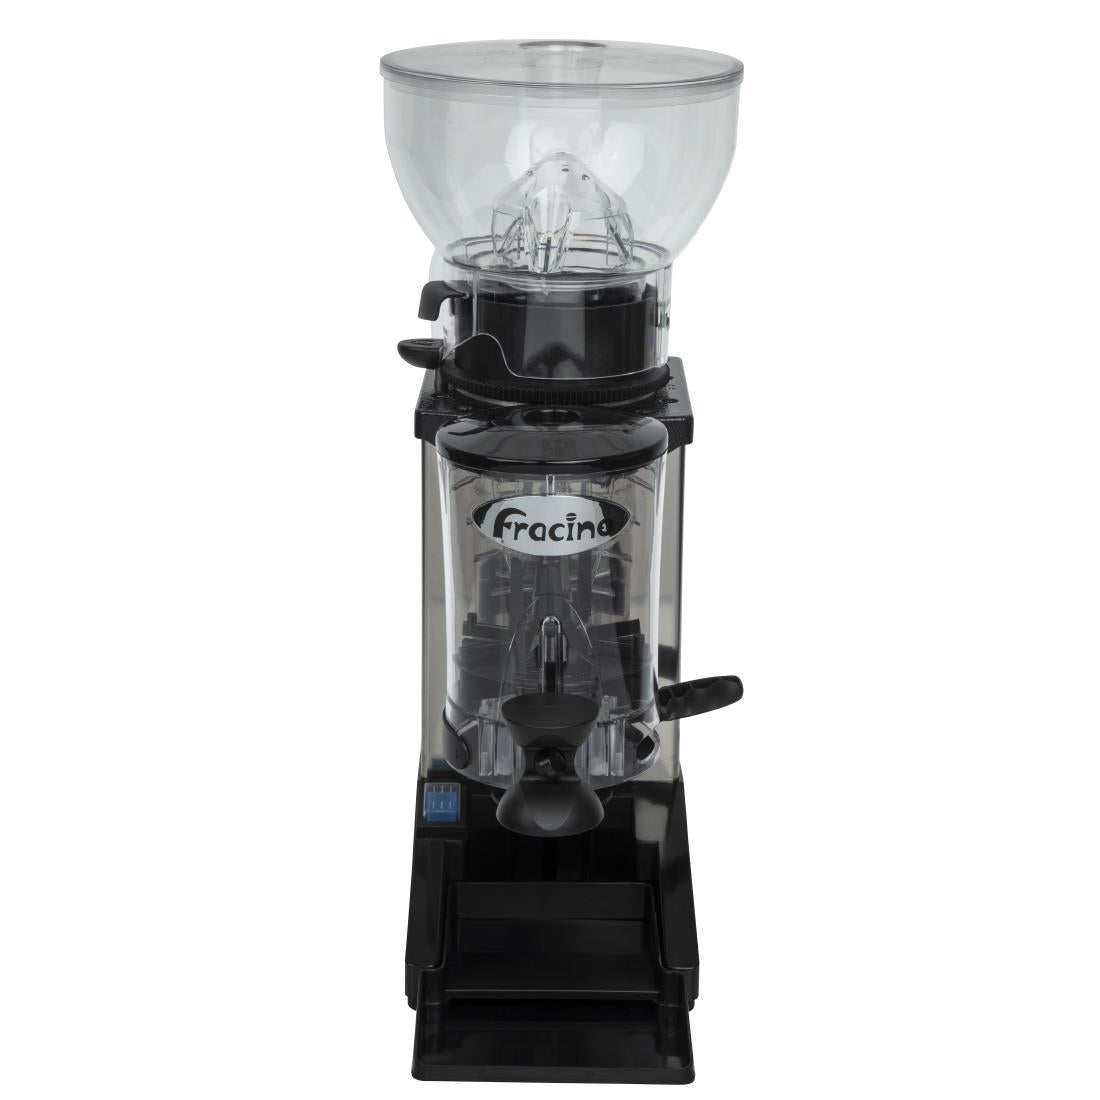 GJ476 Fracino Manual Coffee Grinder Model T